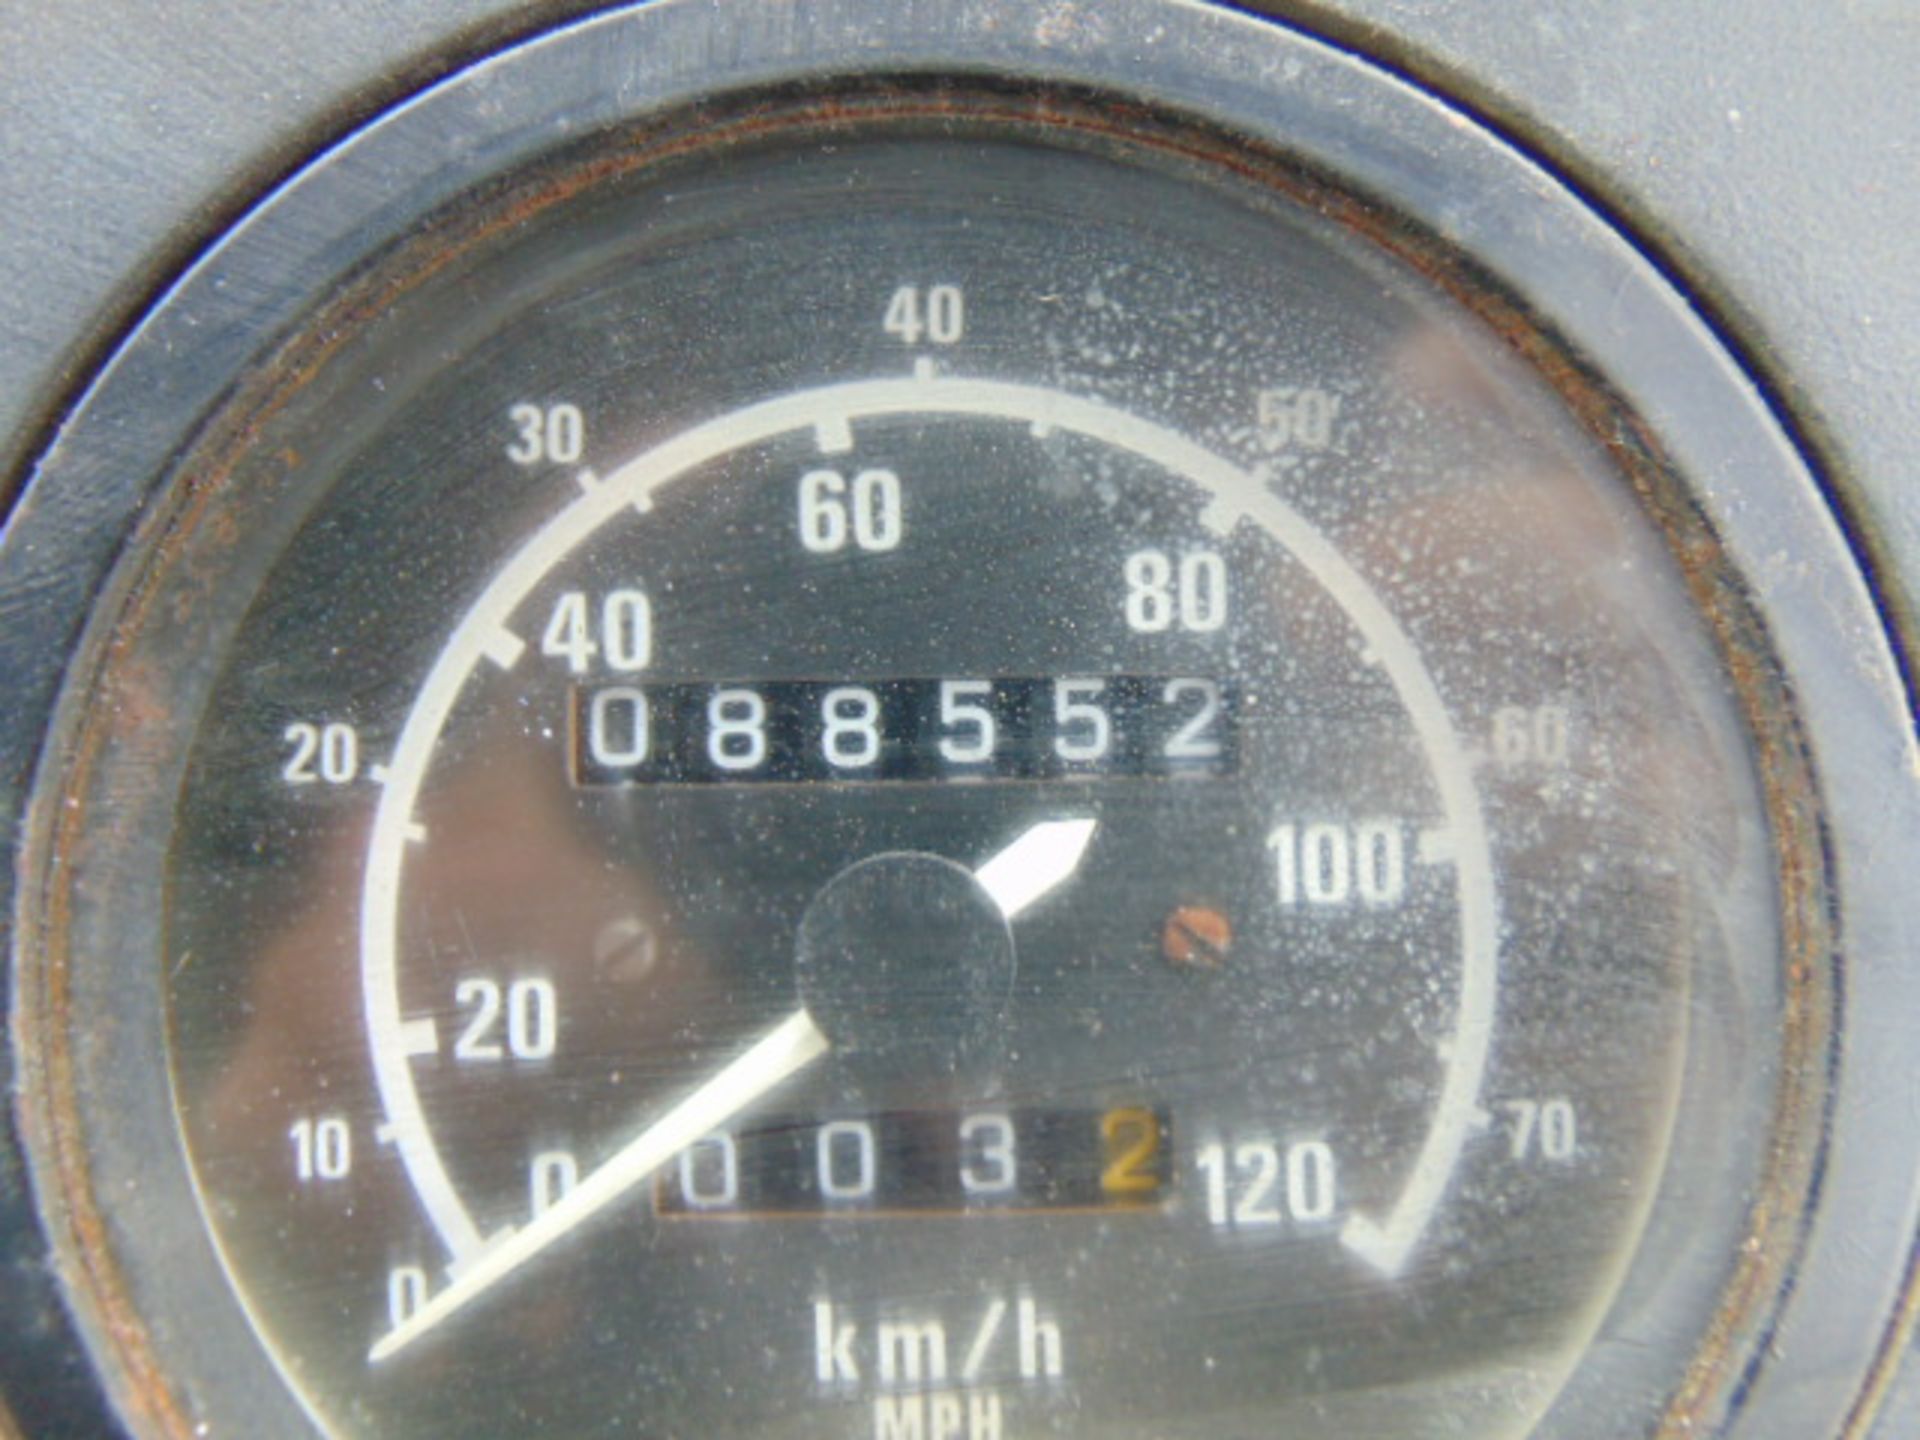 Leyland Daf 45/150 4 x 4 - Image 19 of 24